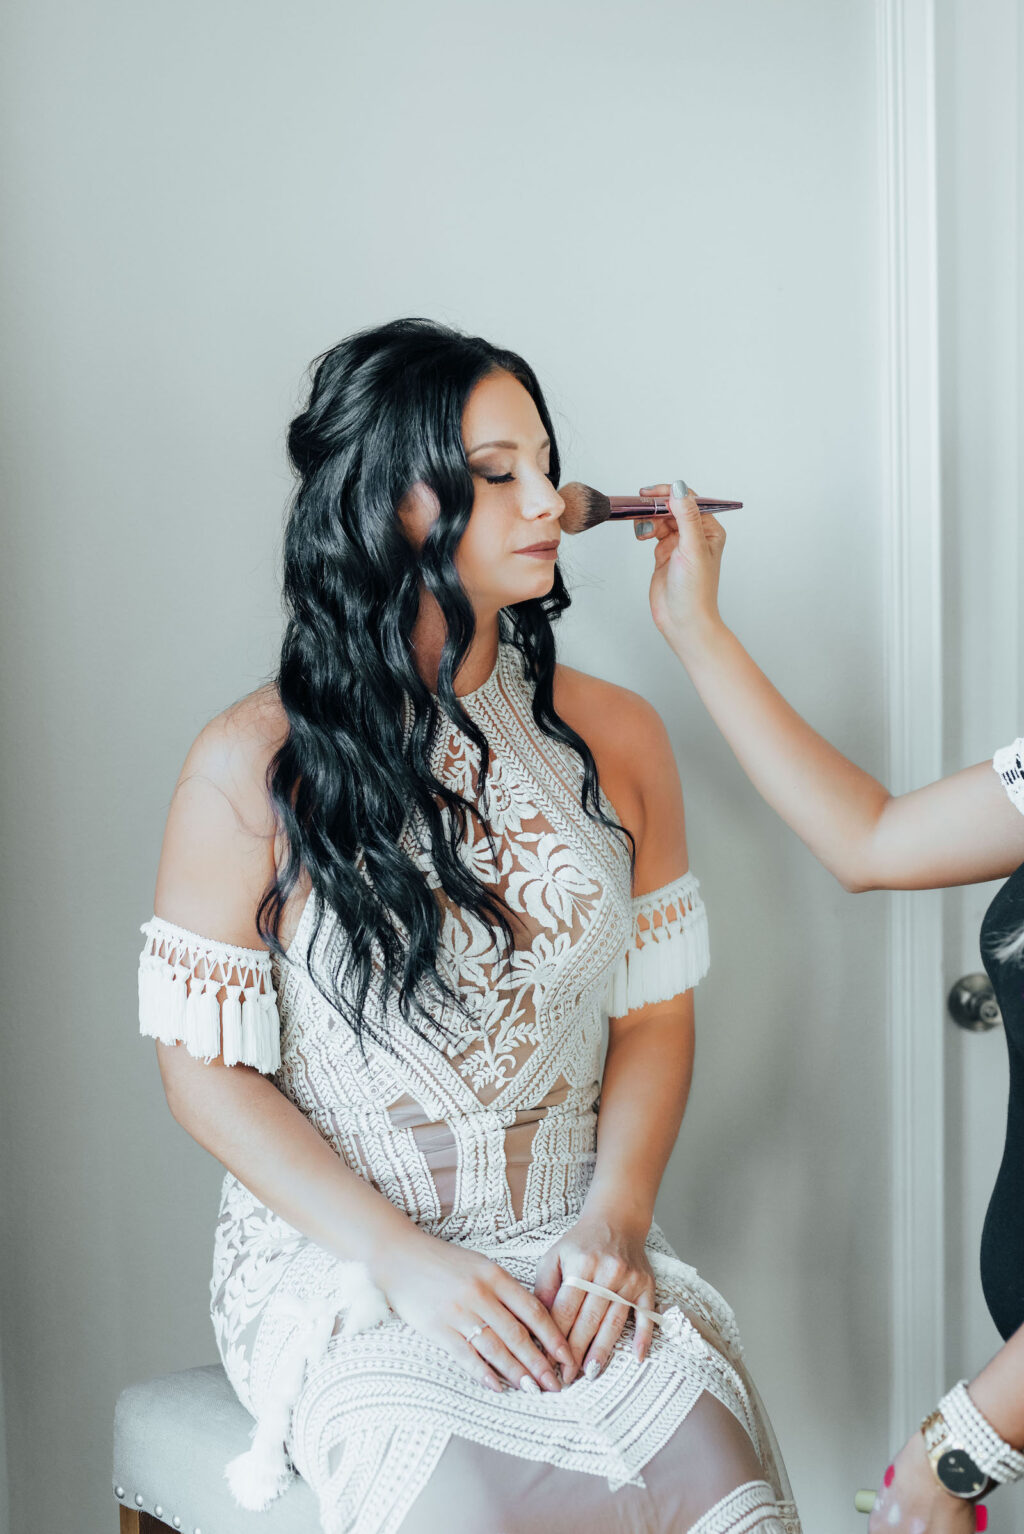 Bridal Half Up Half Down Curled Wedding Hair Style with Dramatic Wedding Makeup | Bride Getting Ready Portrait